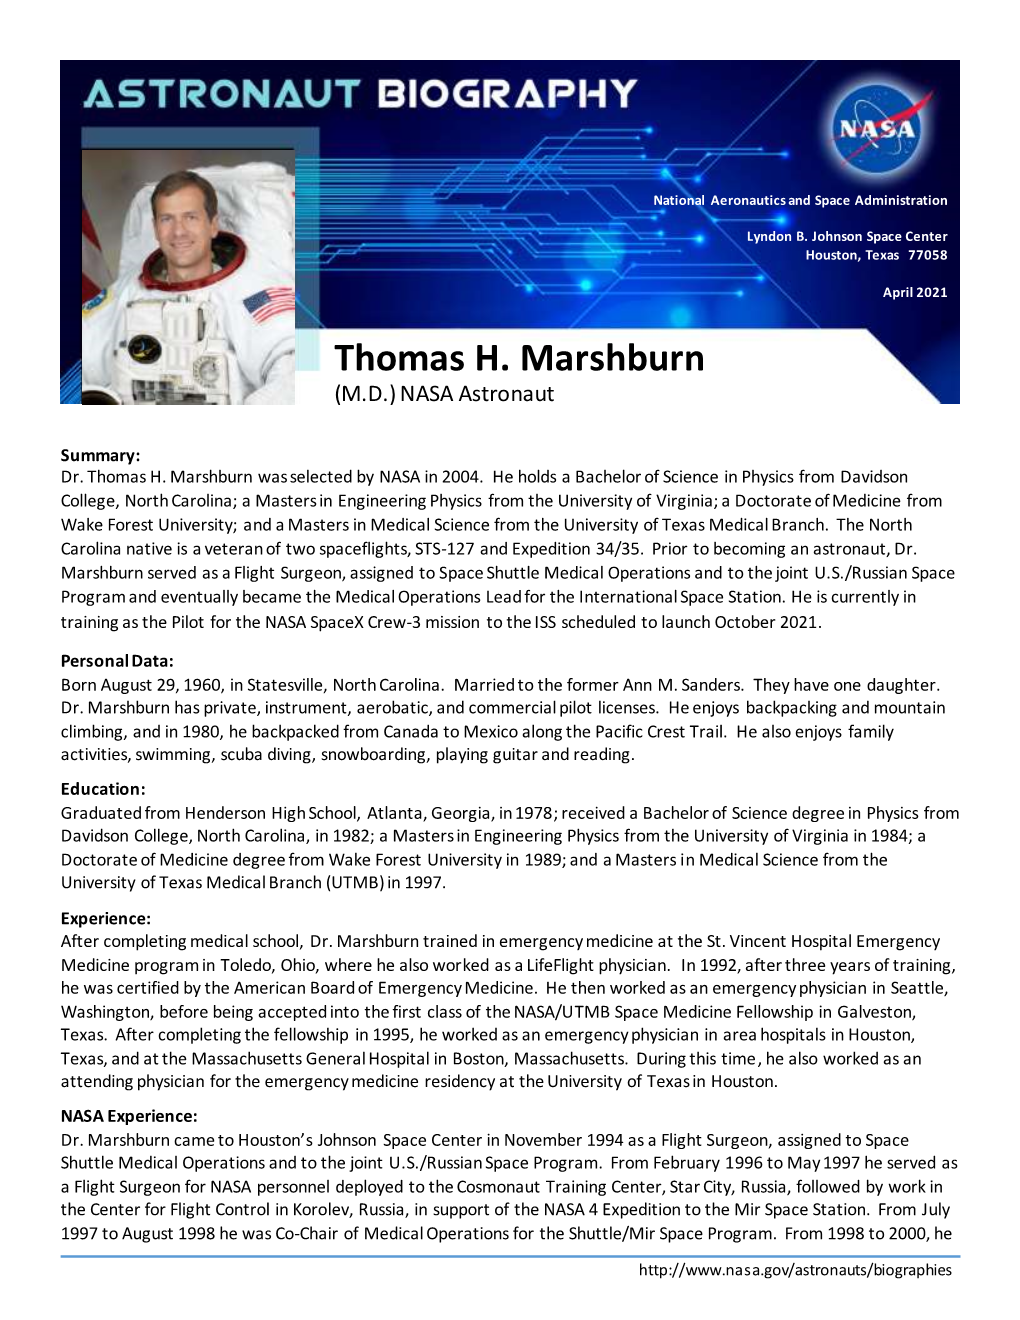 Thomas H. Marshburn (M.D.) NASA Astronaut